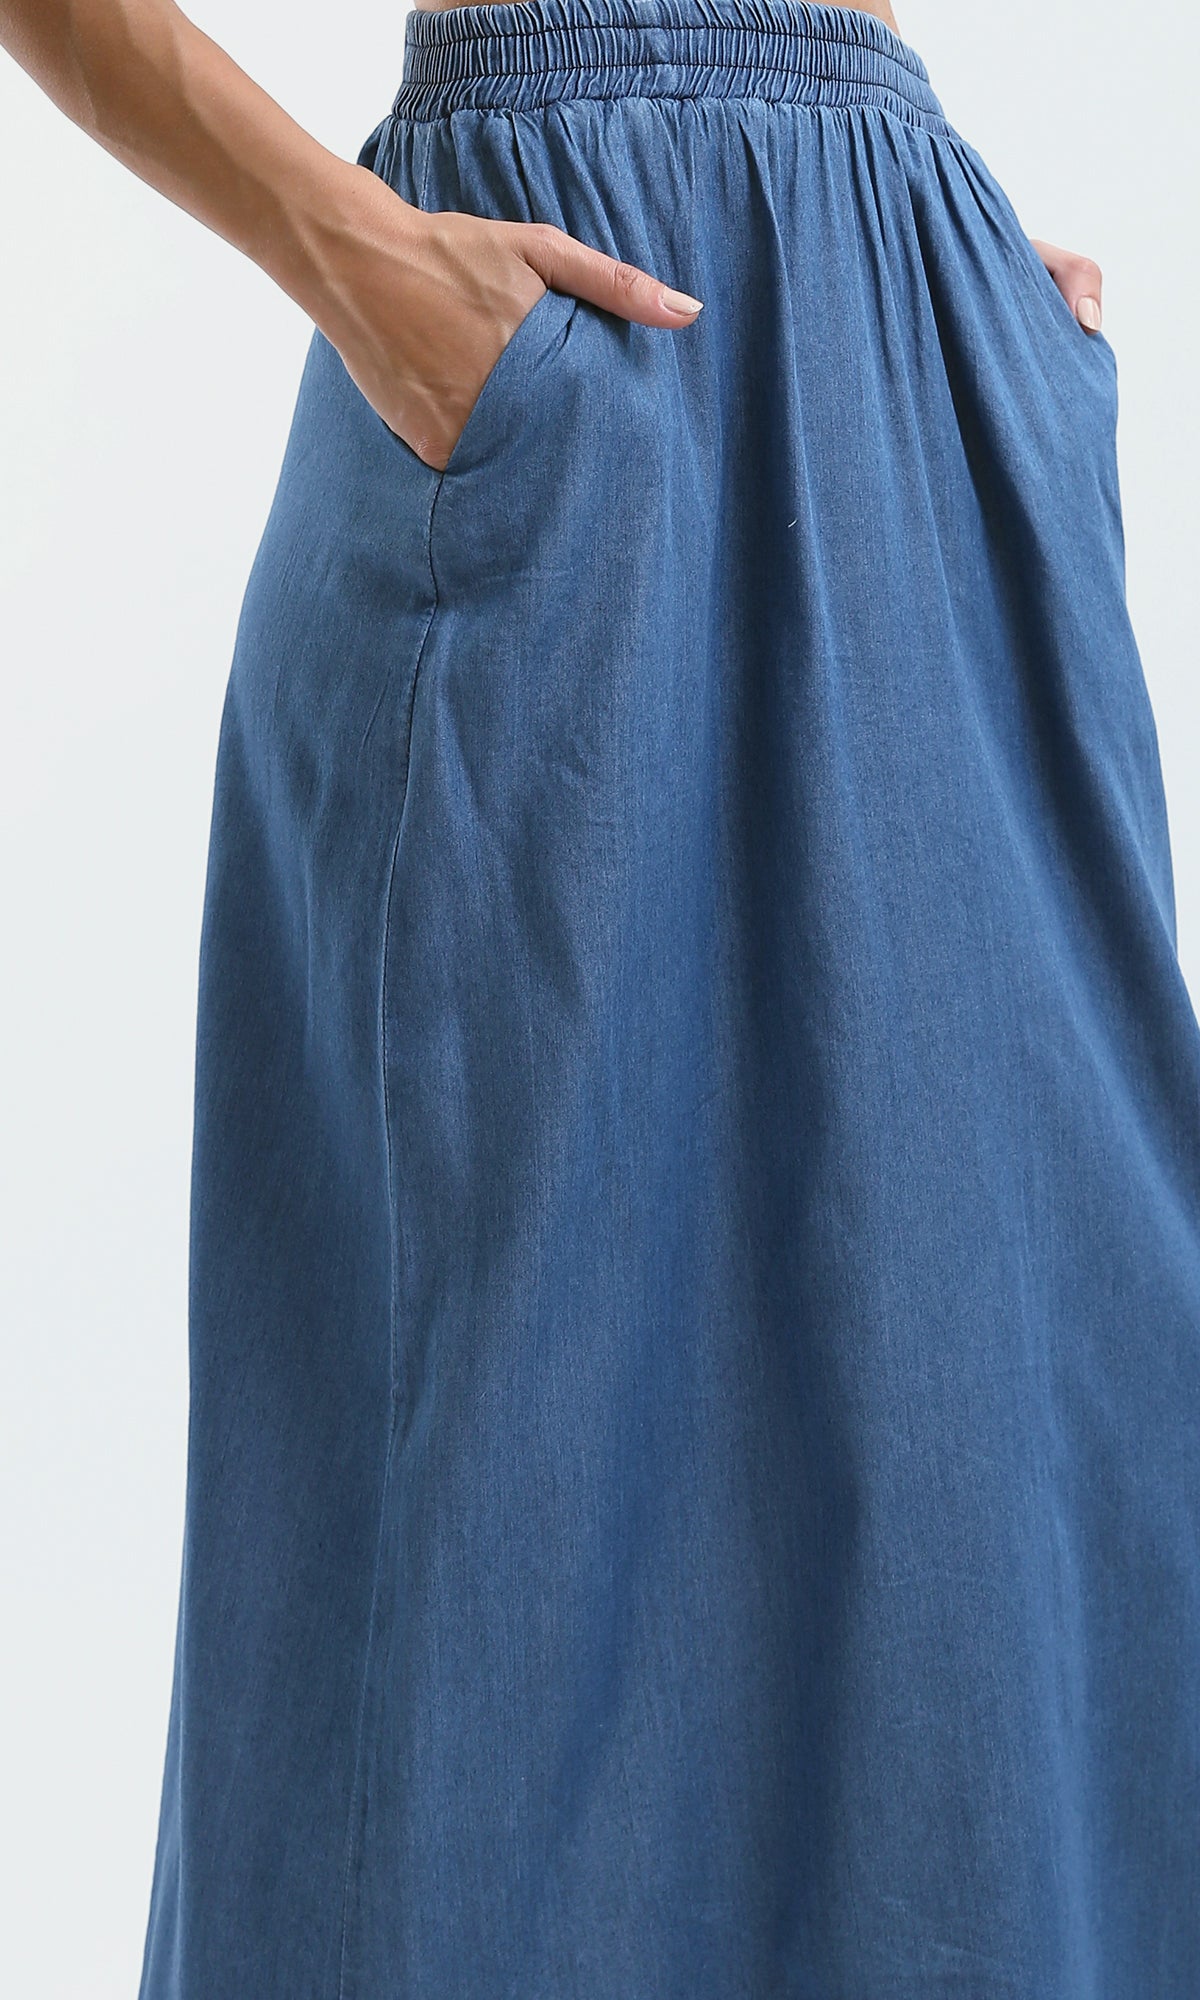 O182850 Elastic Waist Slip On Medium Blue Skirt Two Pockets